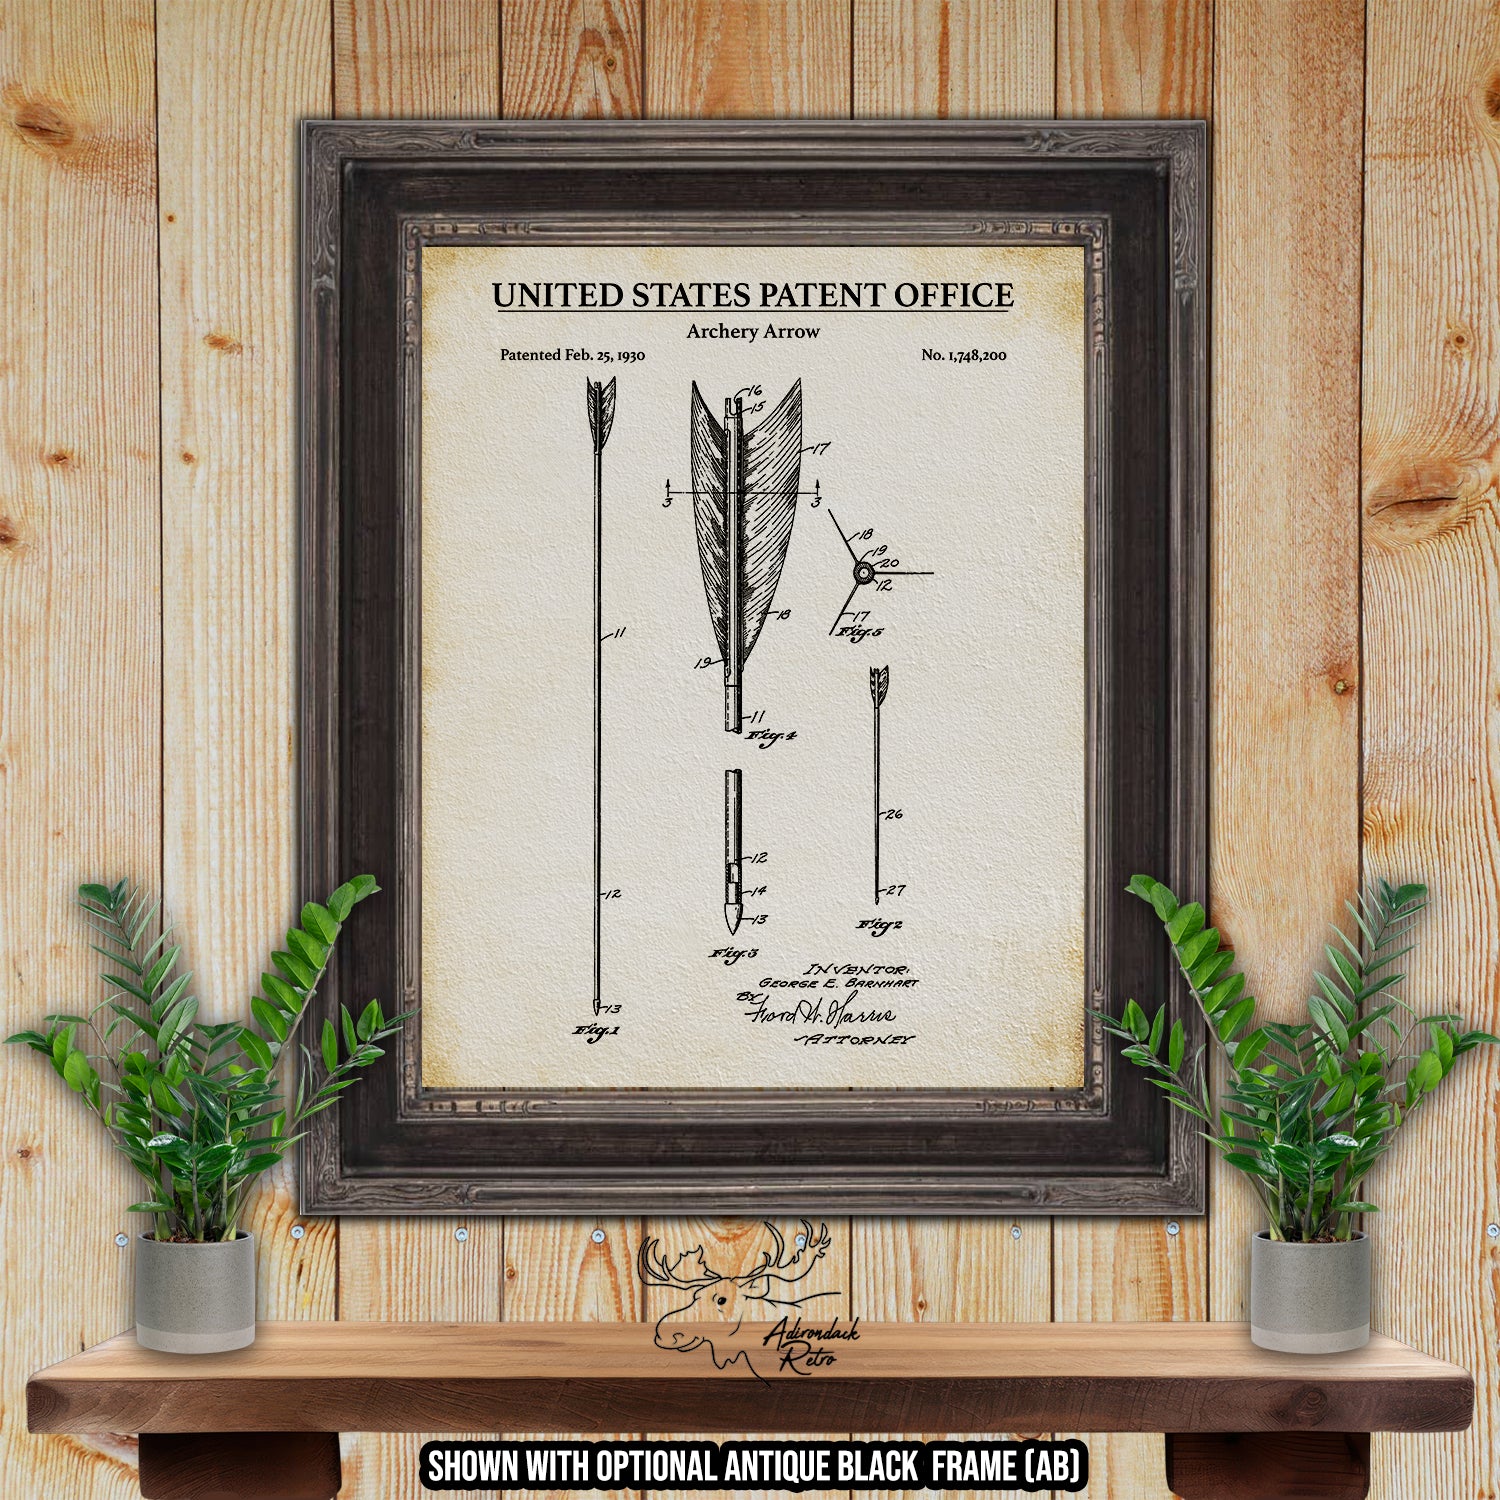 Archery Arrow 1930 Patent Print at Adirondack Retro